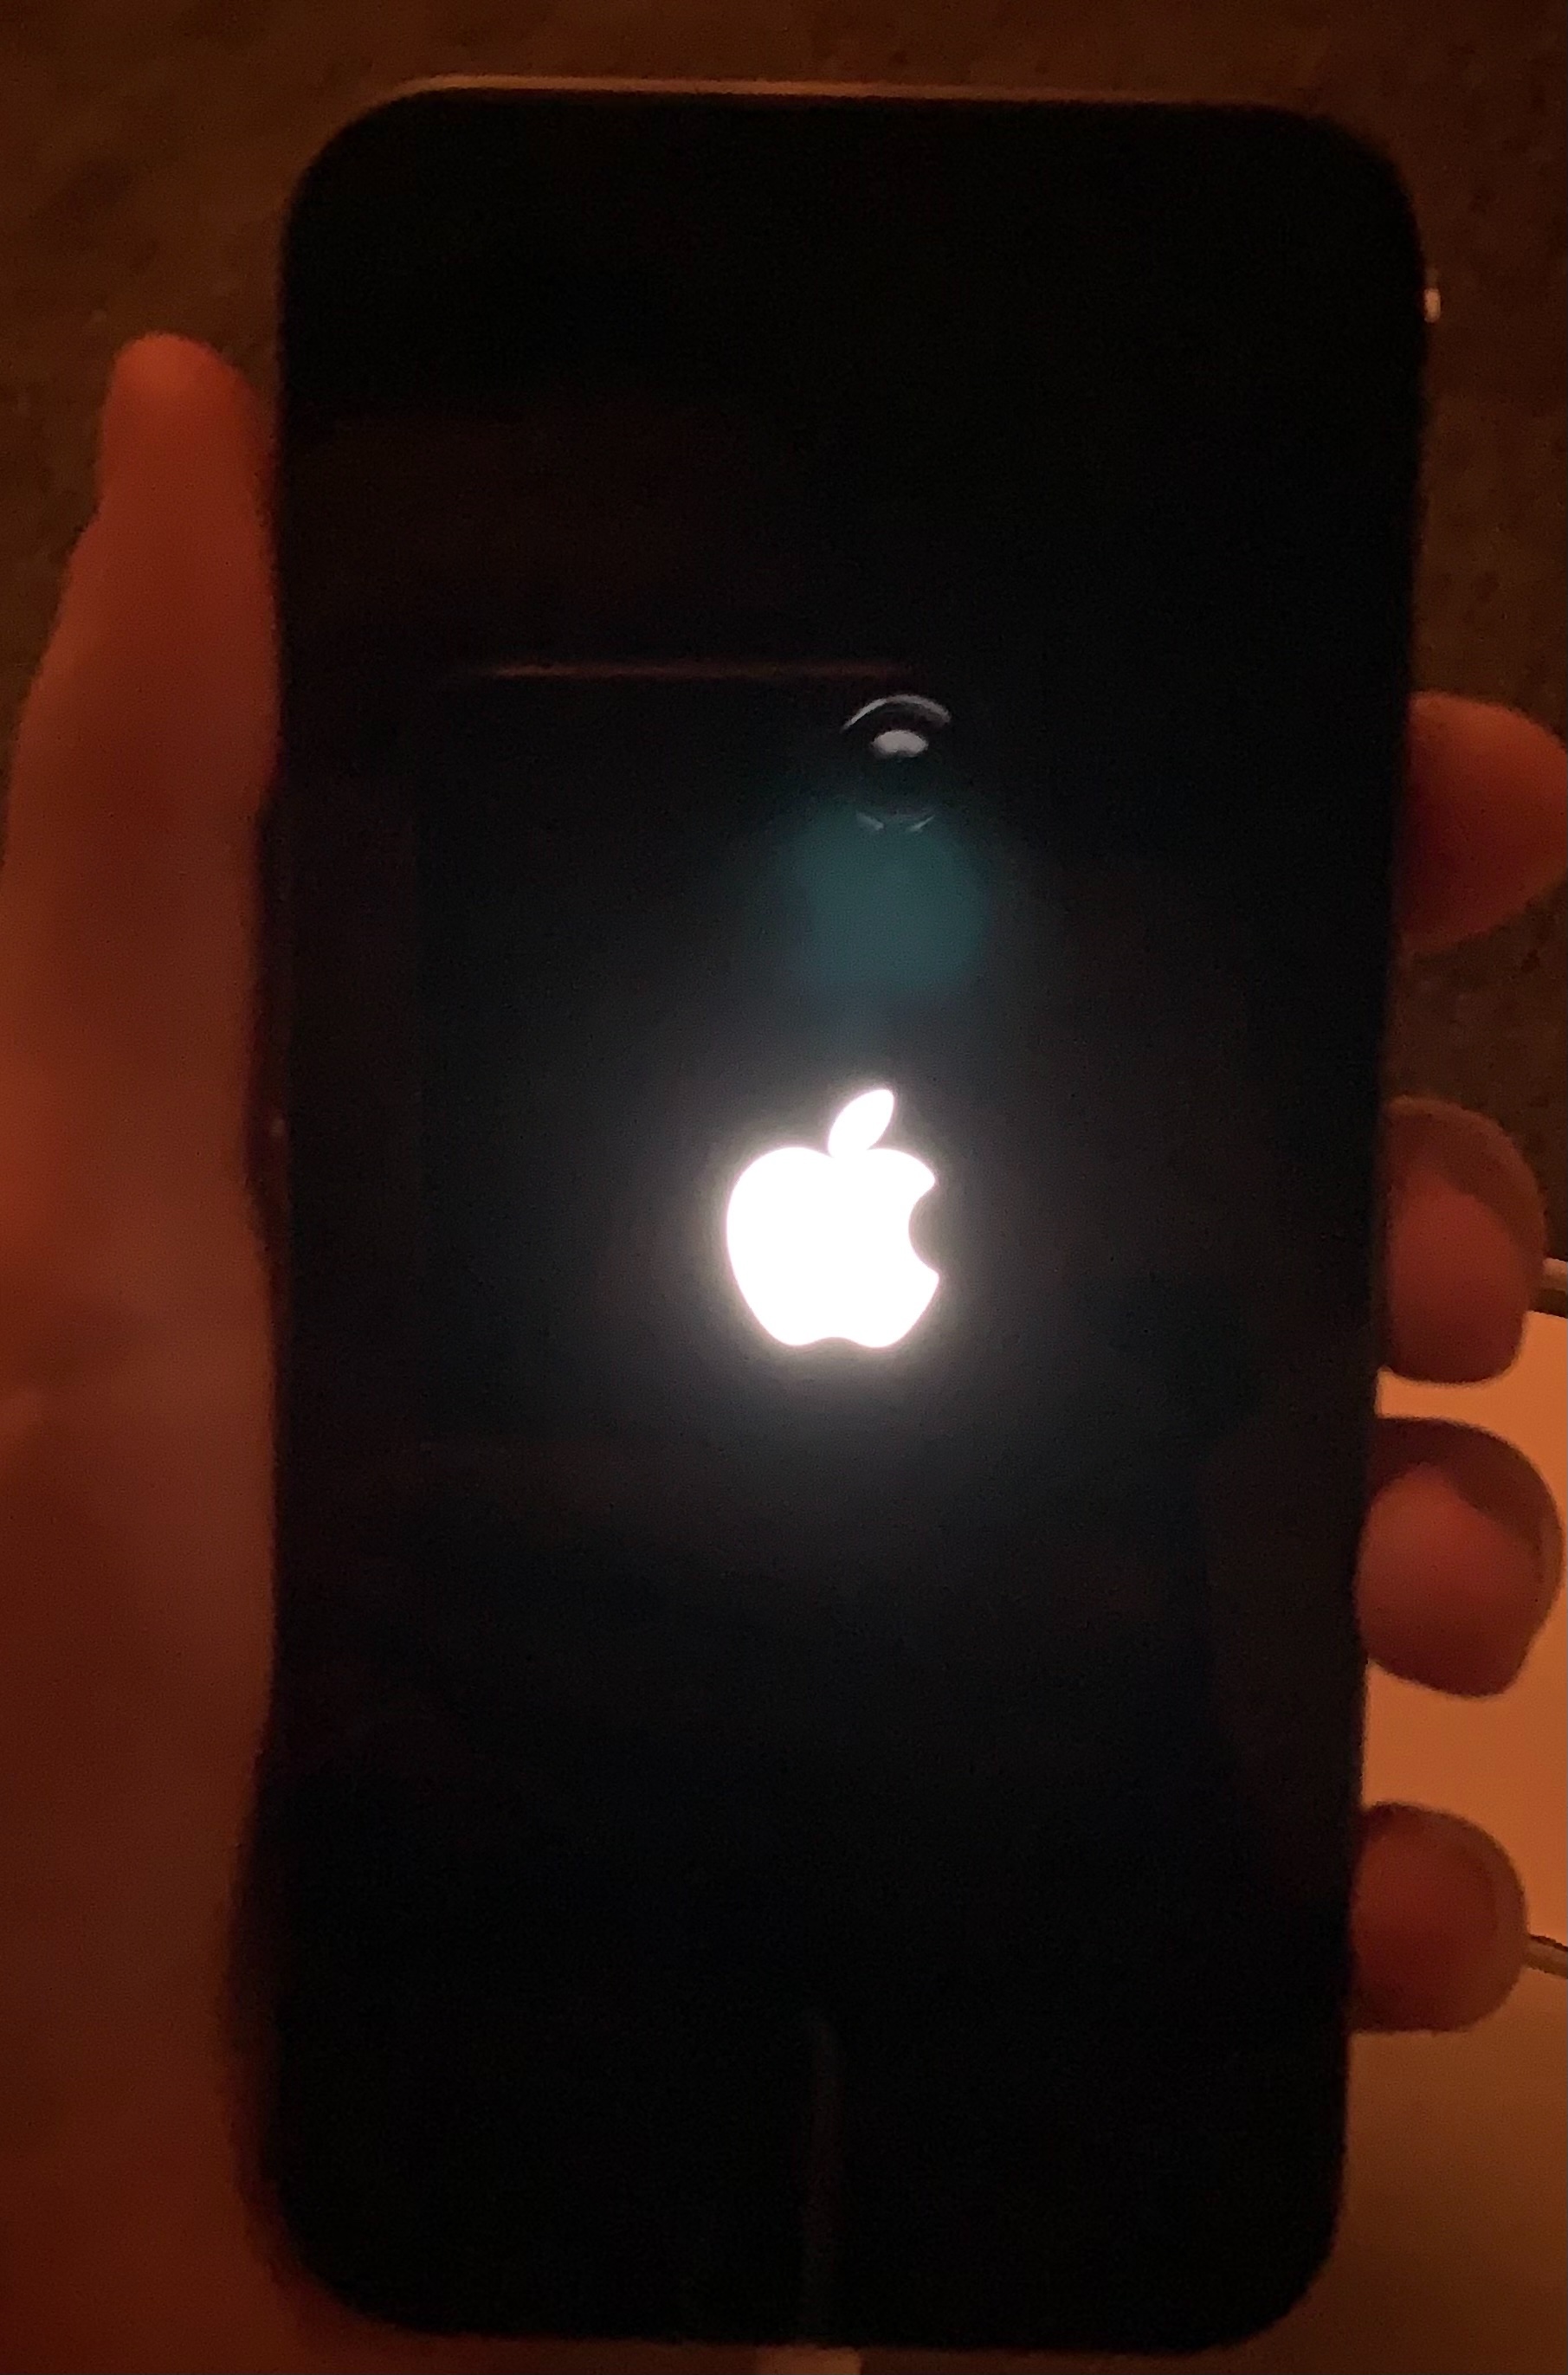 iPhone 12 display tinting flickering